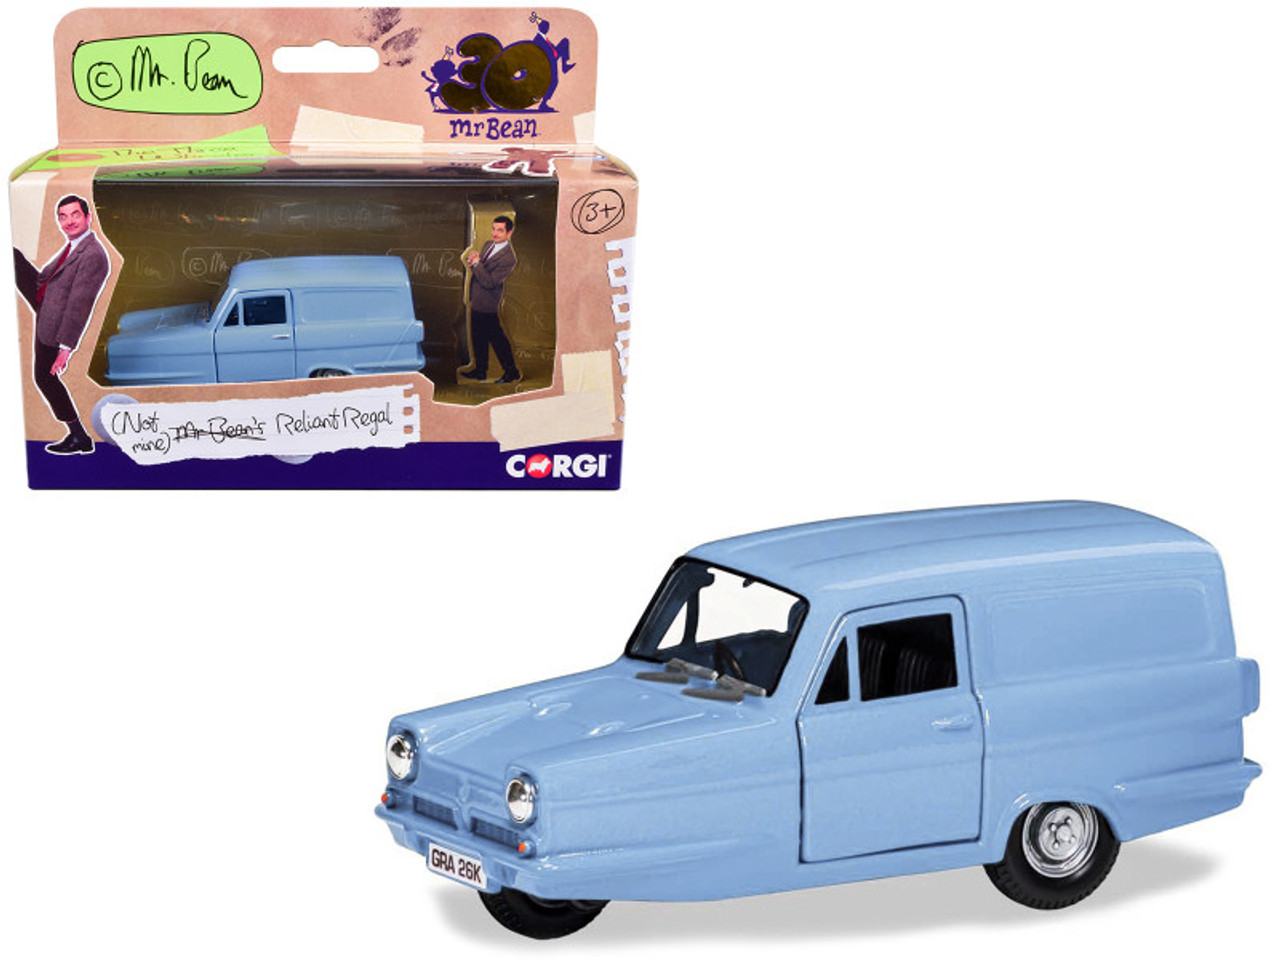 Reliant Regal RHD (Right Hand Drive) Light Blue "30 Years of Mr. Bean" Mr. Bean (1990-1995) TV Series Diecast Model Car by Corgi